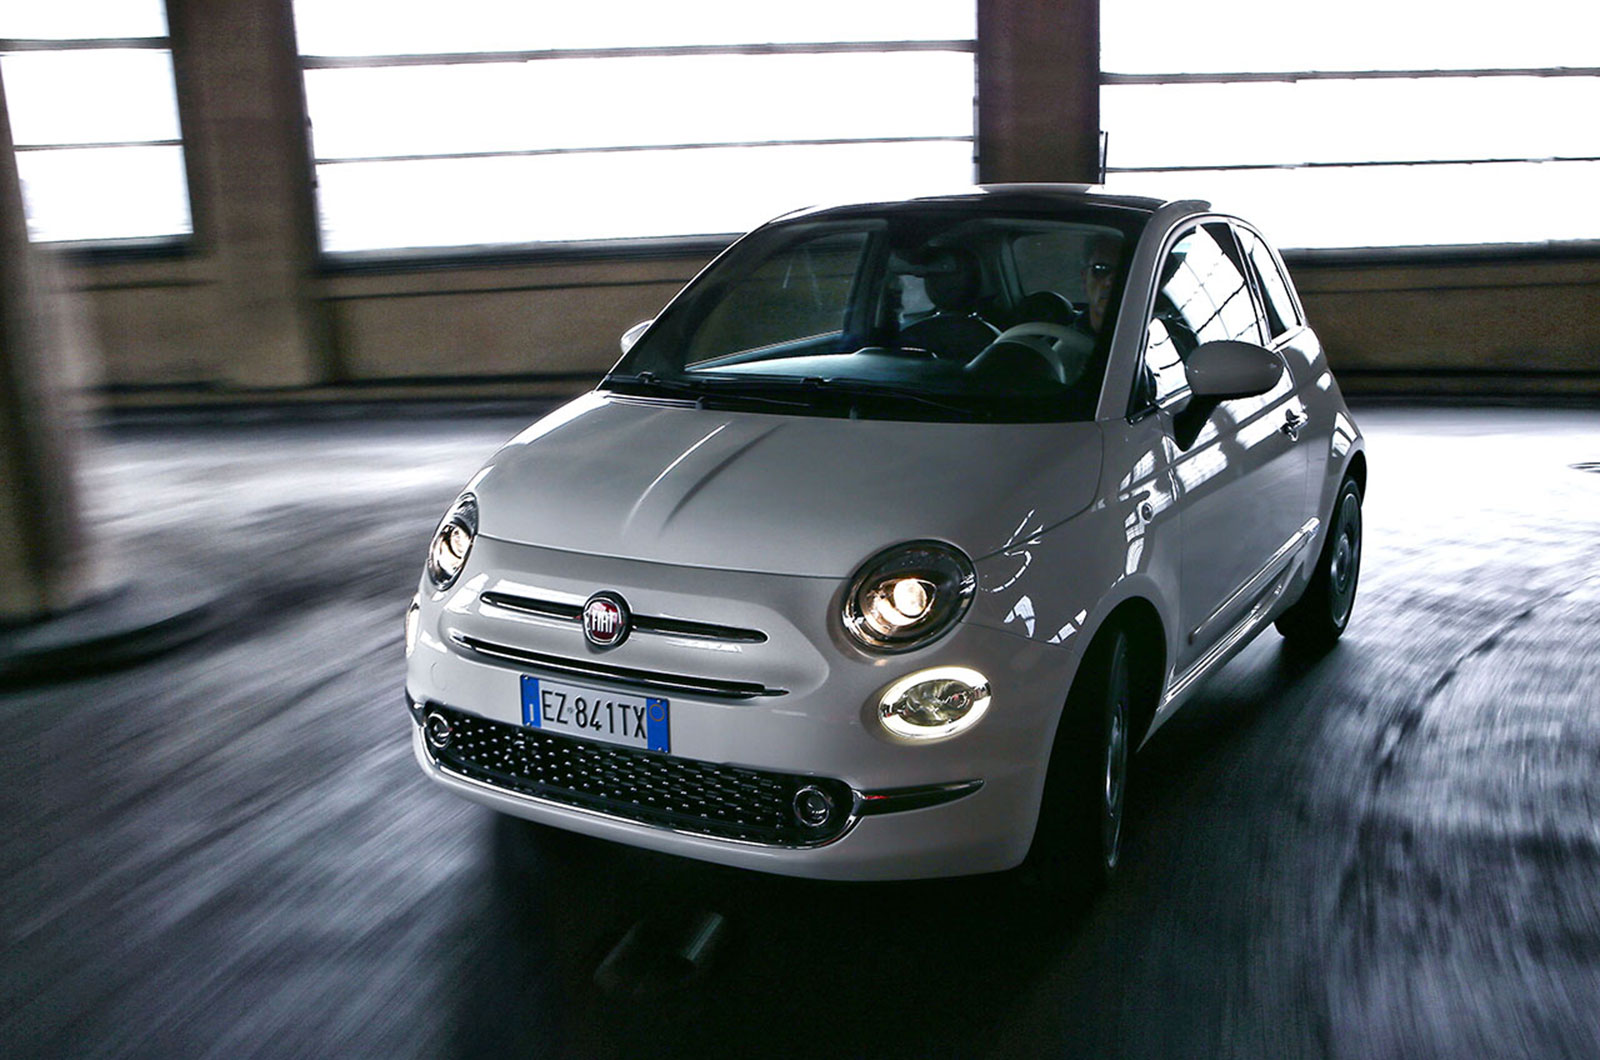 2015 Fiat 500 gets engine and visual tweaks